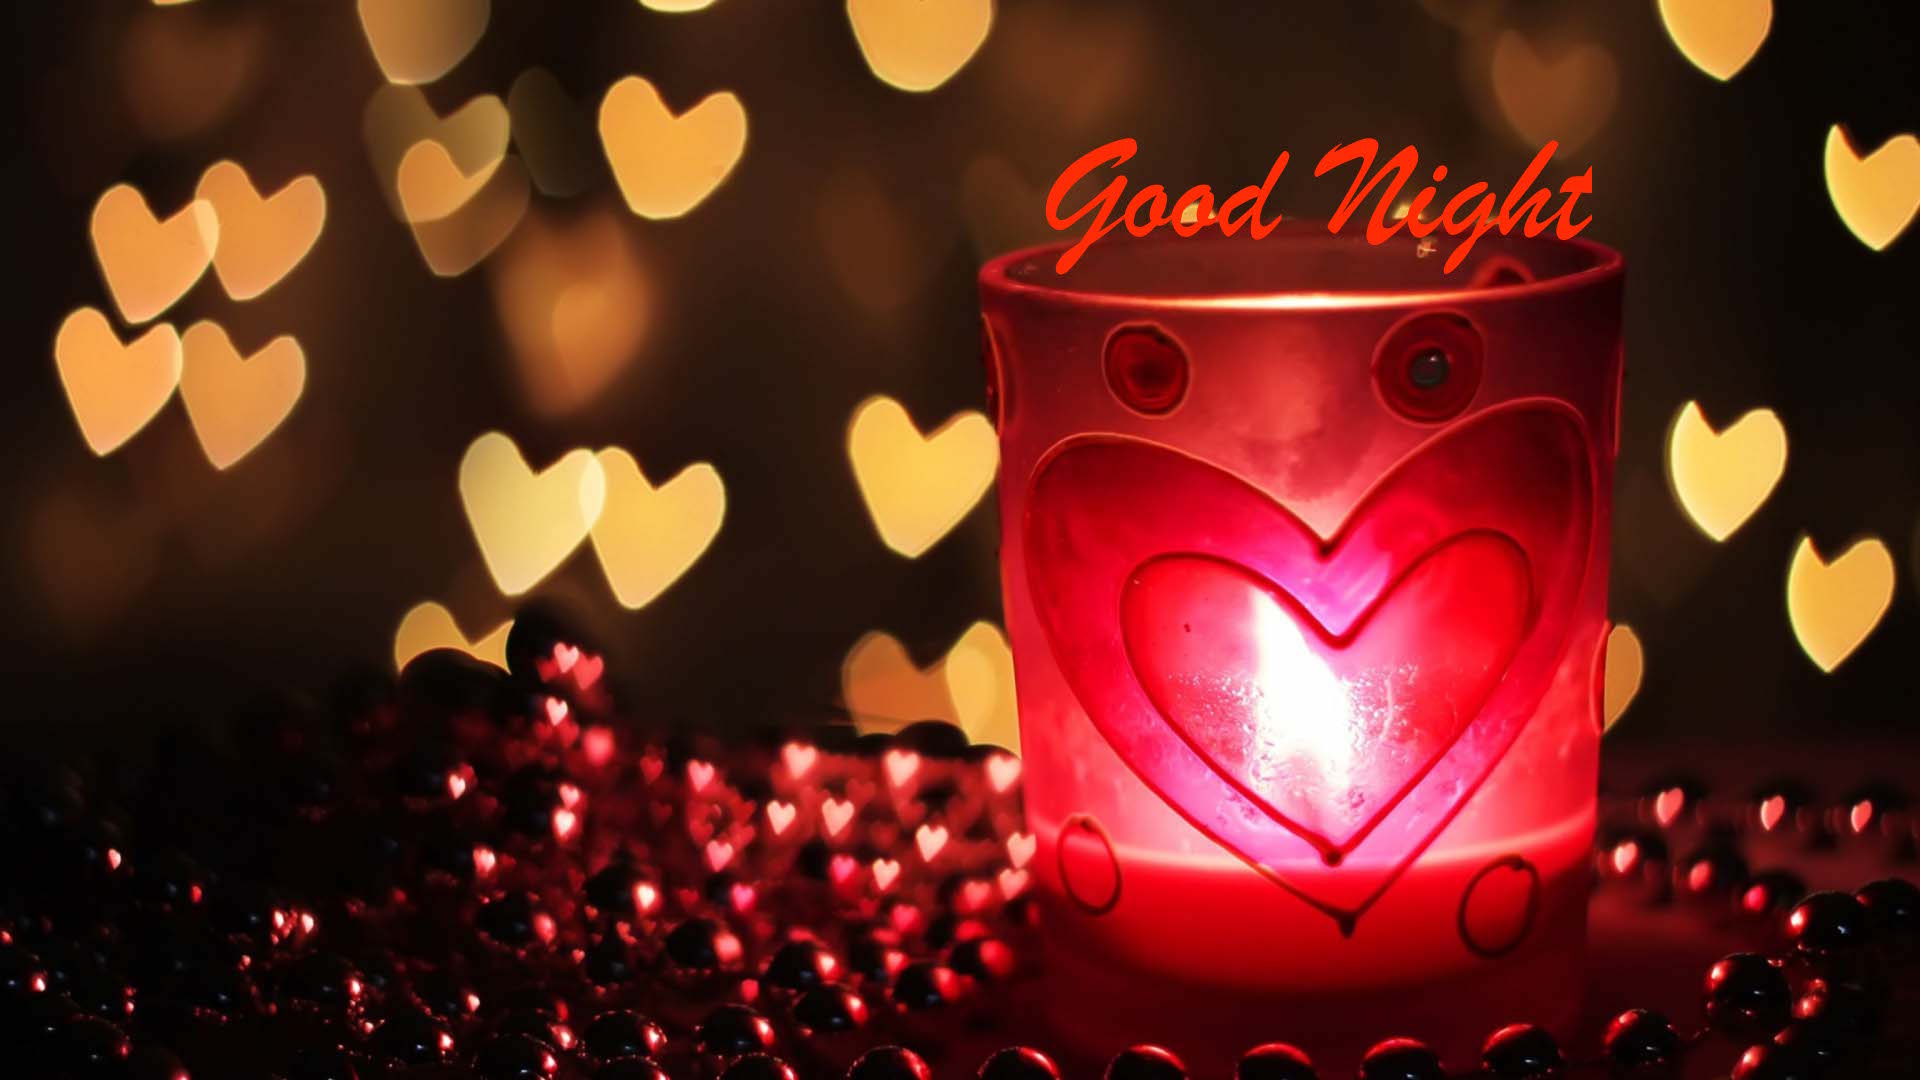 Good night heart red image